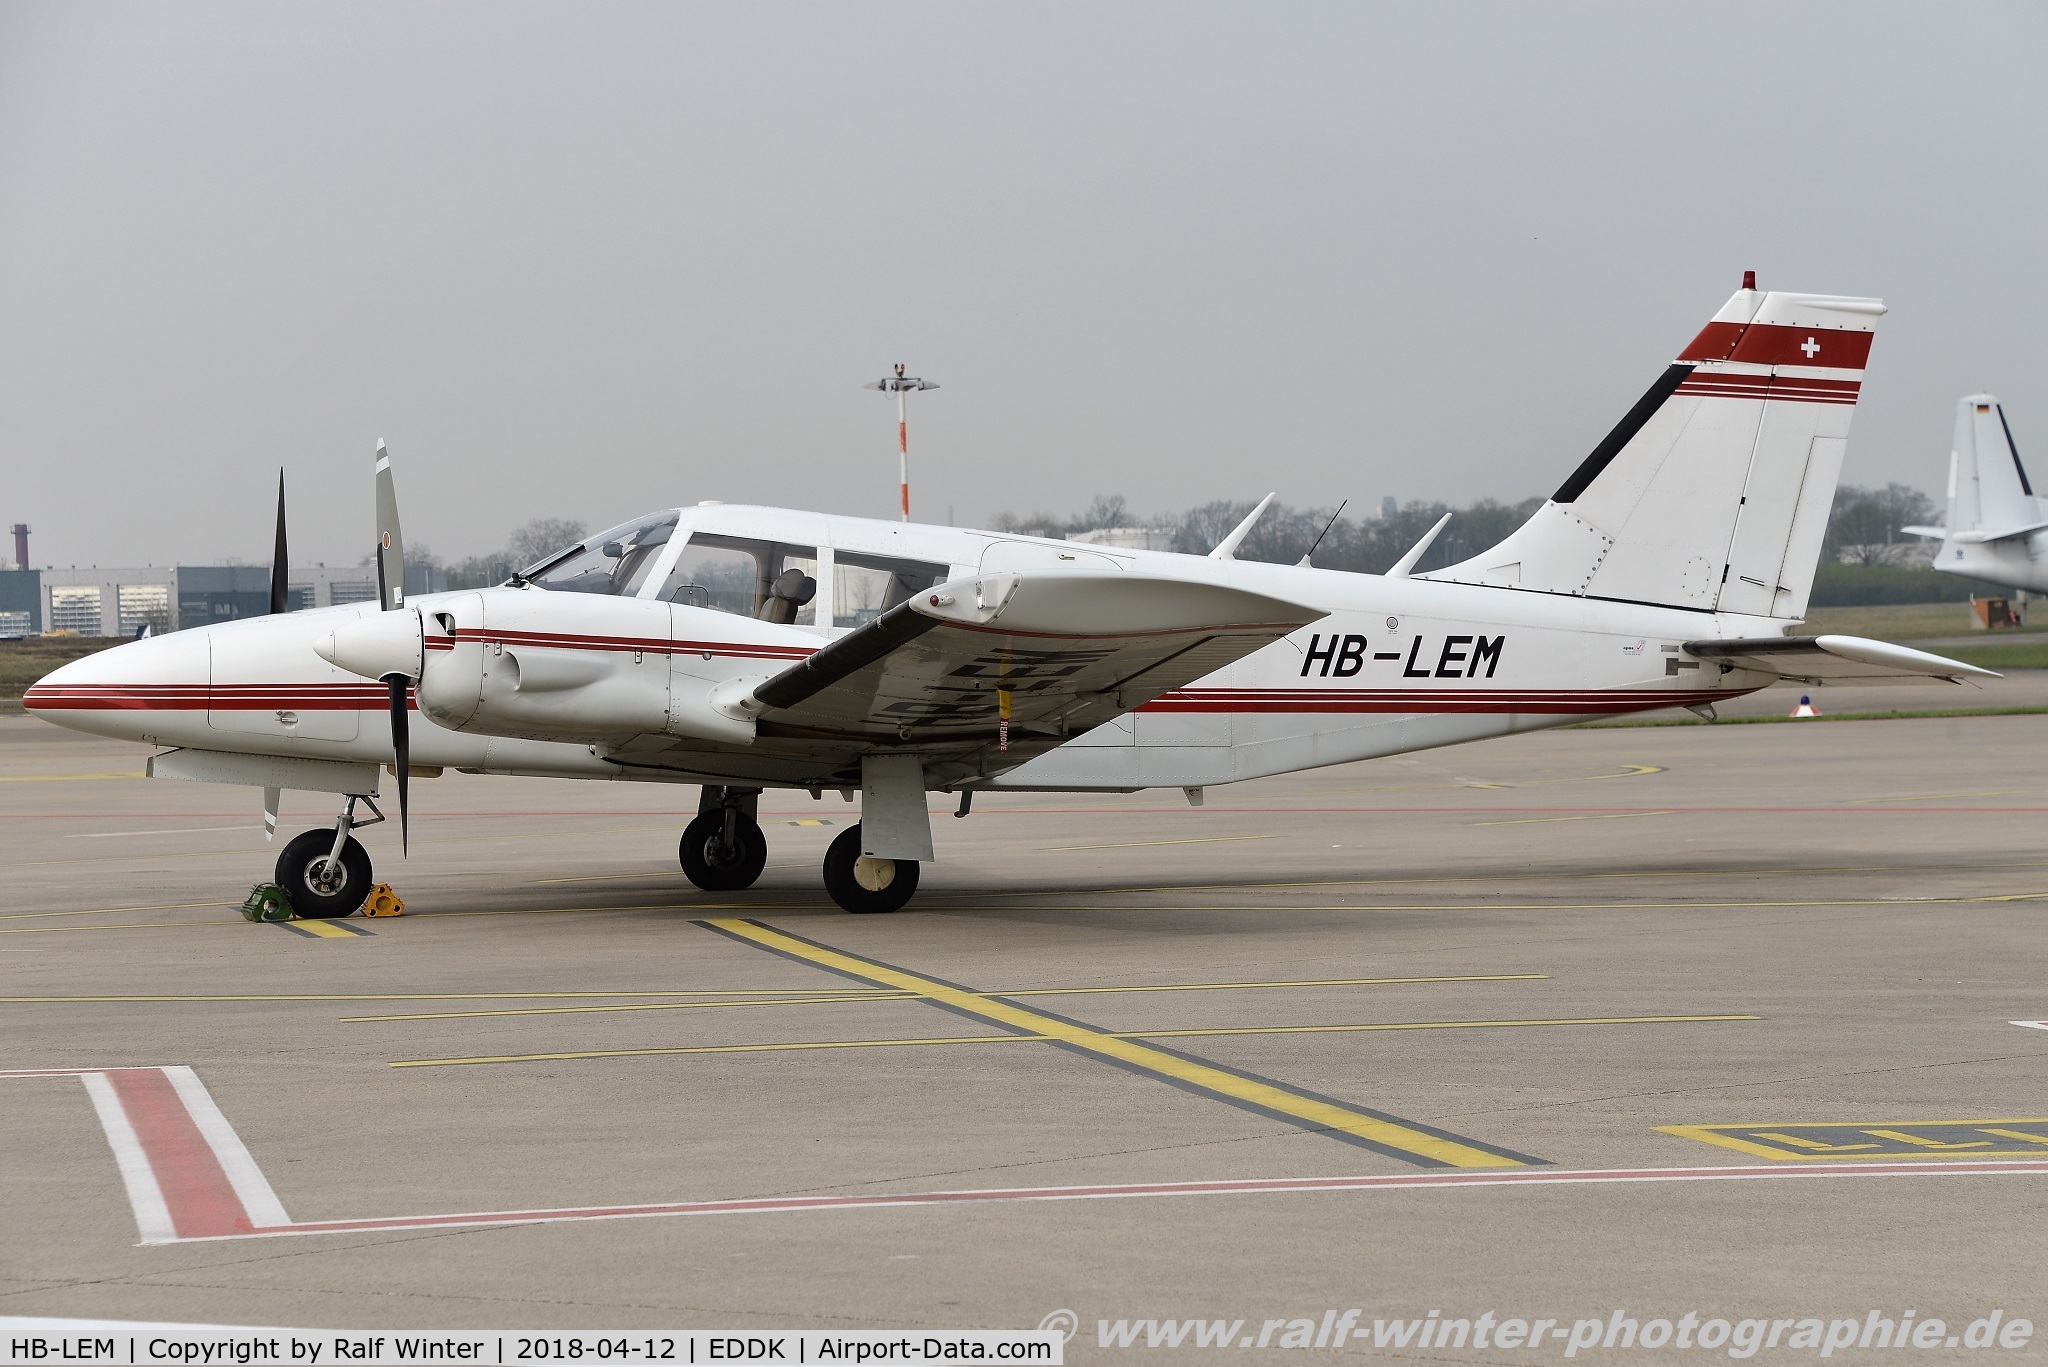 HB-LEM, 1973 Piper PA-34-200 Seneca C/N 34-7350327, Piper PA-34-200 Seneca - Air Safety - 34-7350327 - HB-LEM - 12.04.2018 - CGN